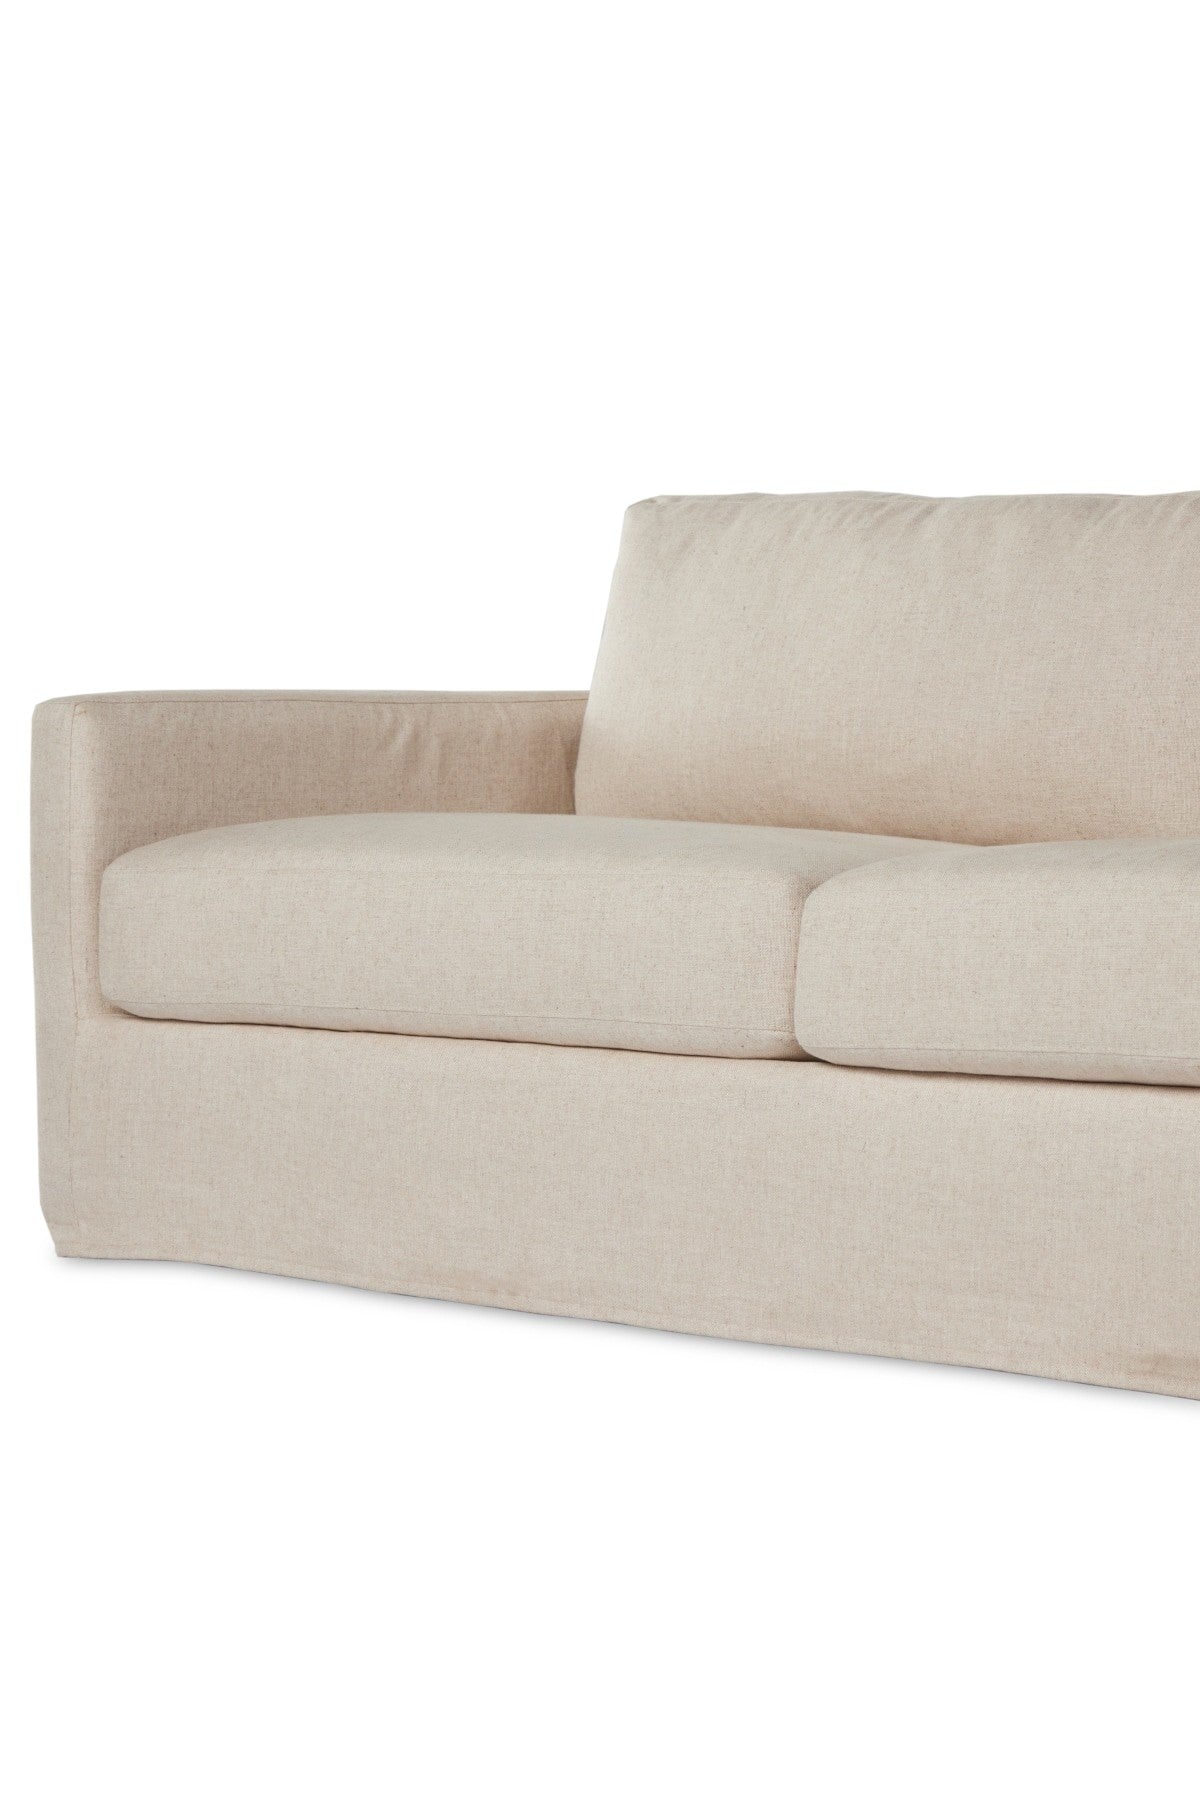 Wescott Slipcover Sofa - Creme